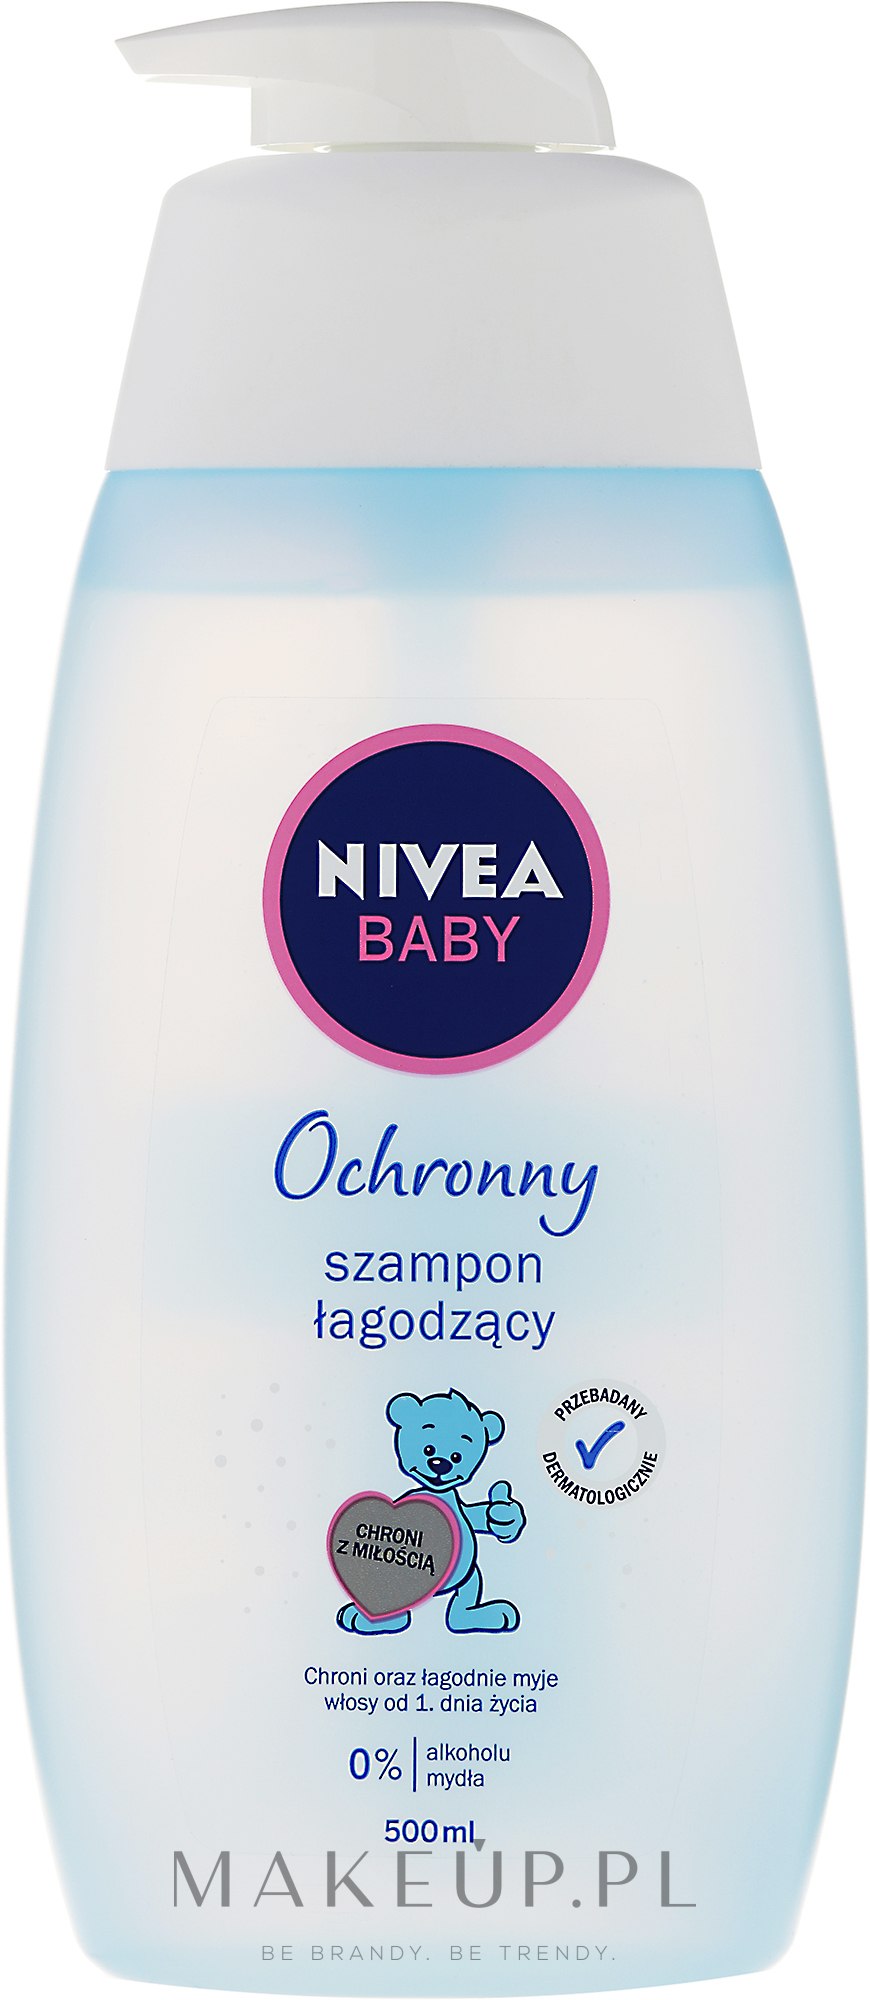 nivea baby delikatny szampon nadajacy polysk